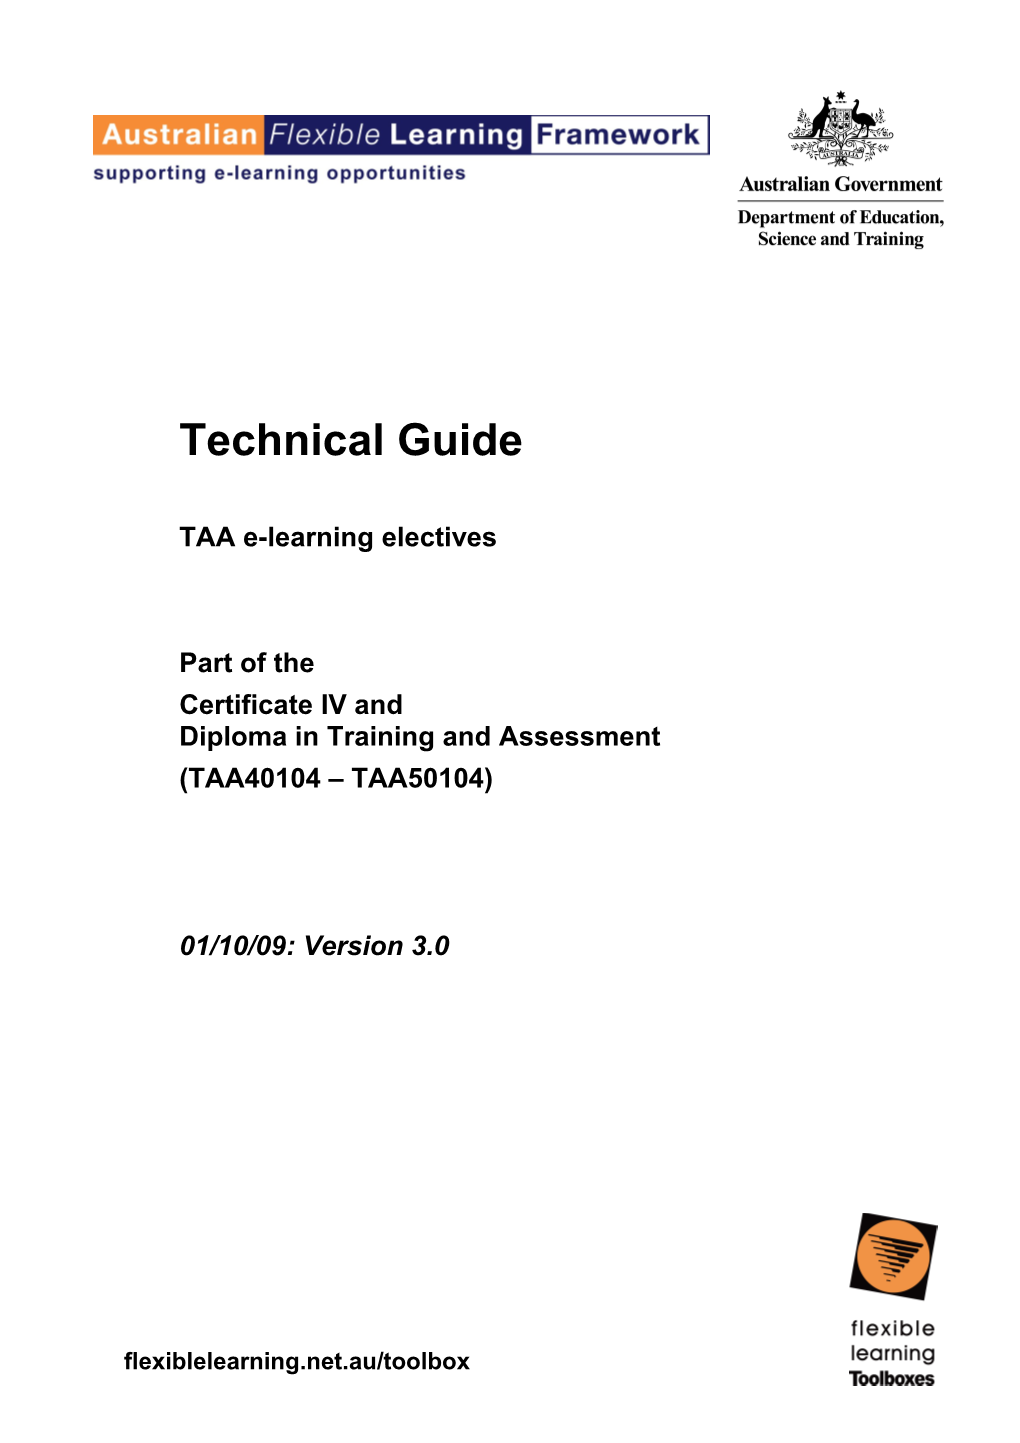 TAA E-Learning Electives Toolbox (V3.0) Technical Guide